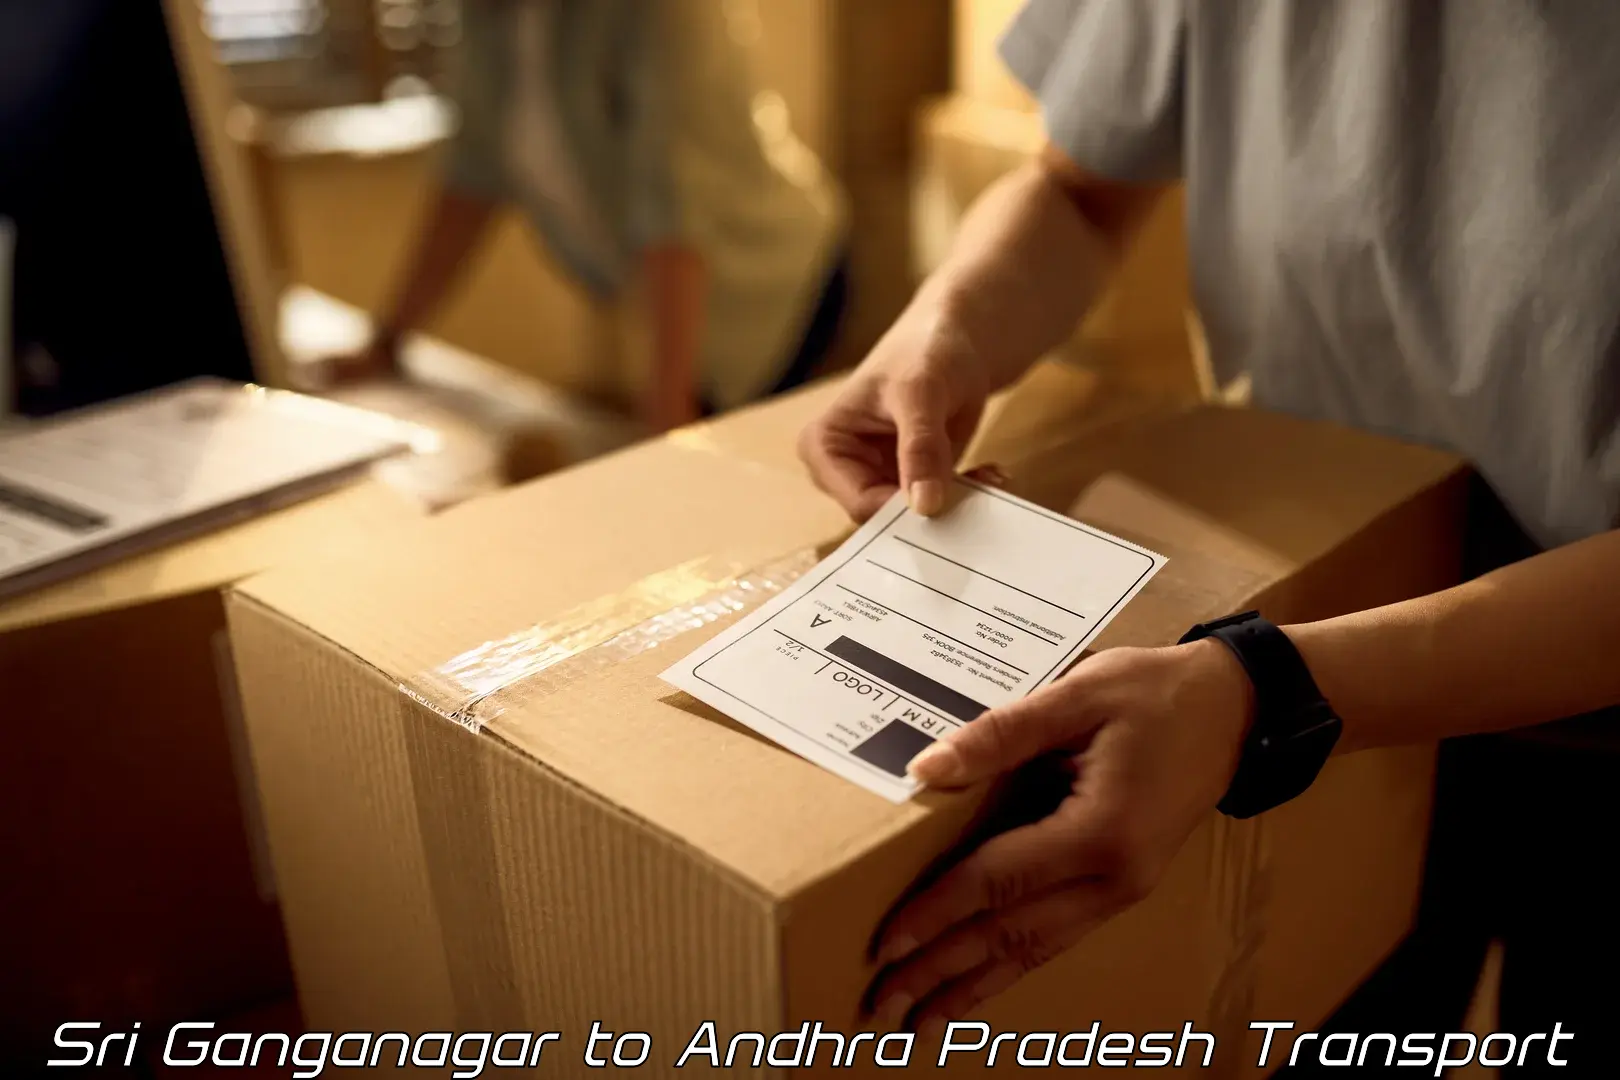 Shipping partner Sri Ganganagar to Tripuranthakam